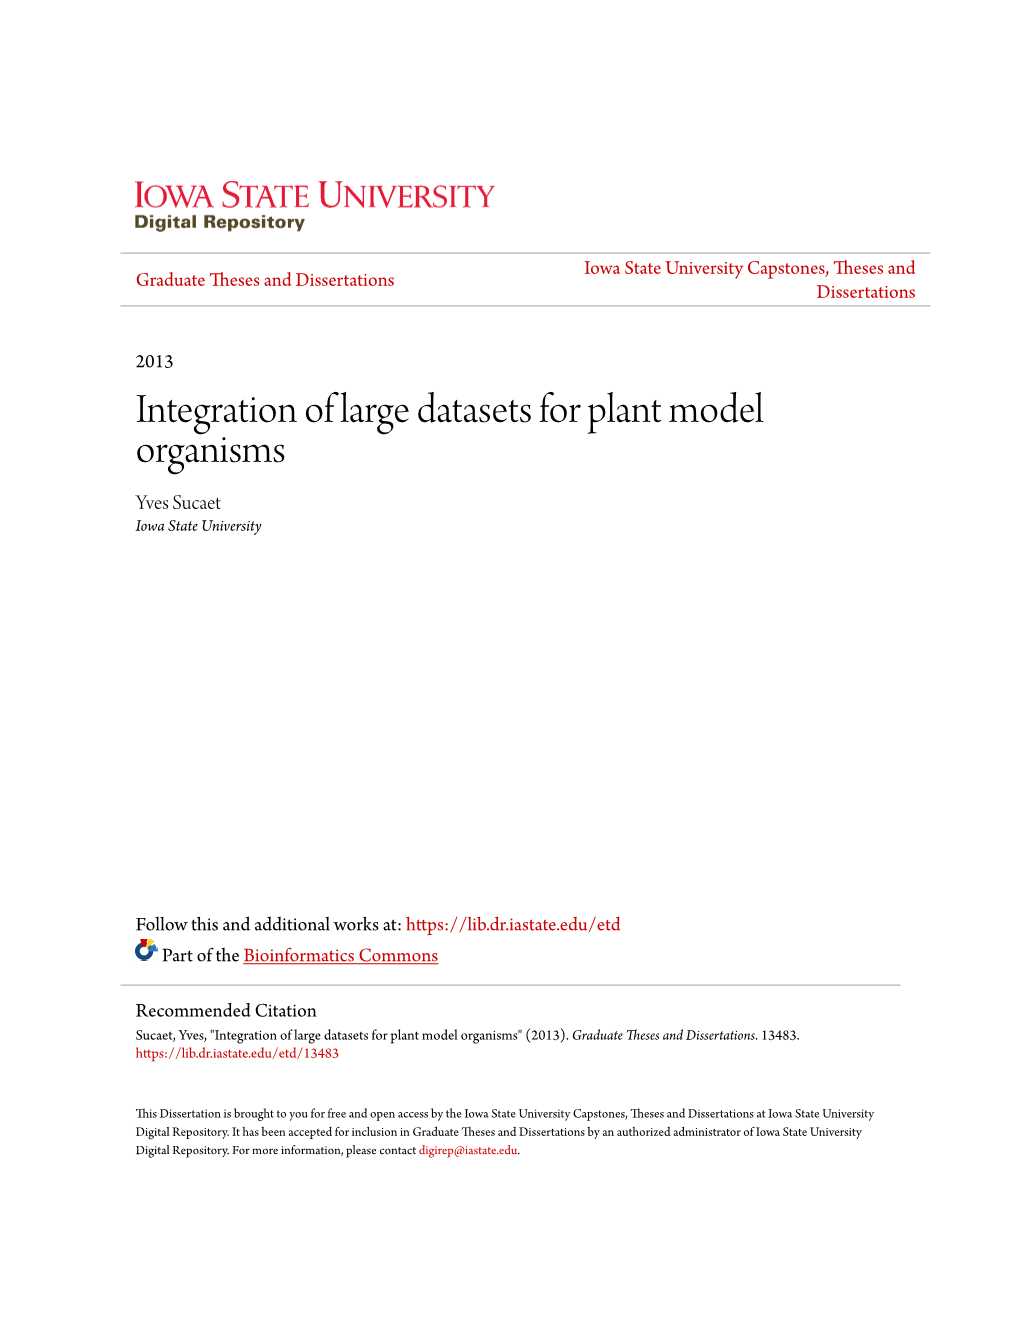 Integration of Large Datasets for Plant Model Organisms Yves Sucaet Iowa State University